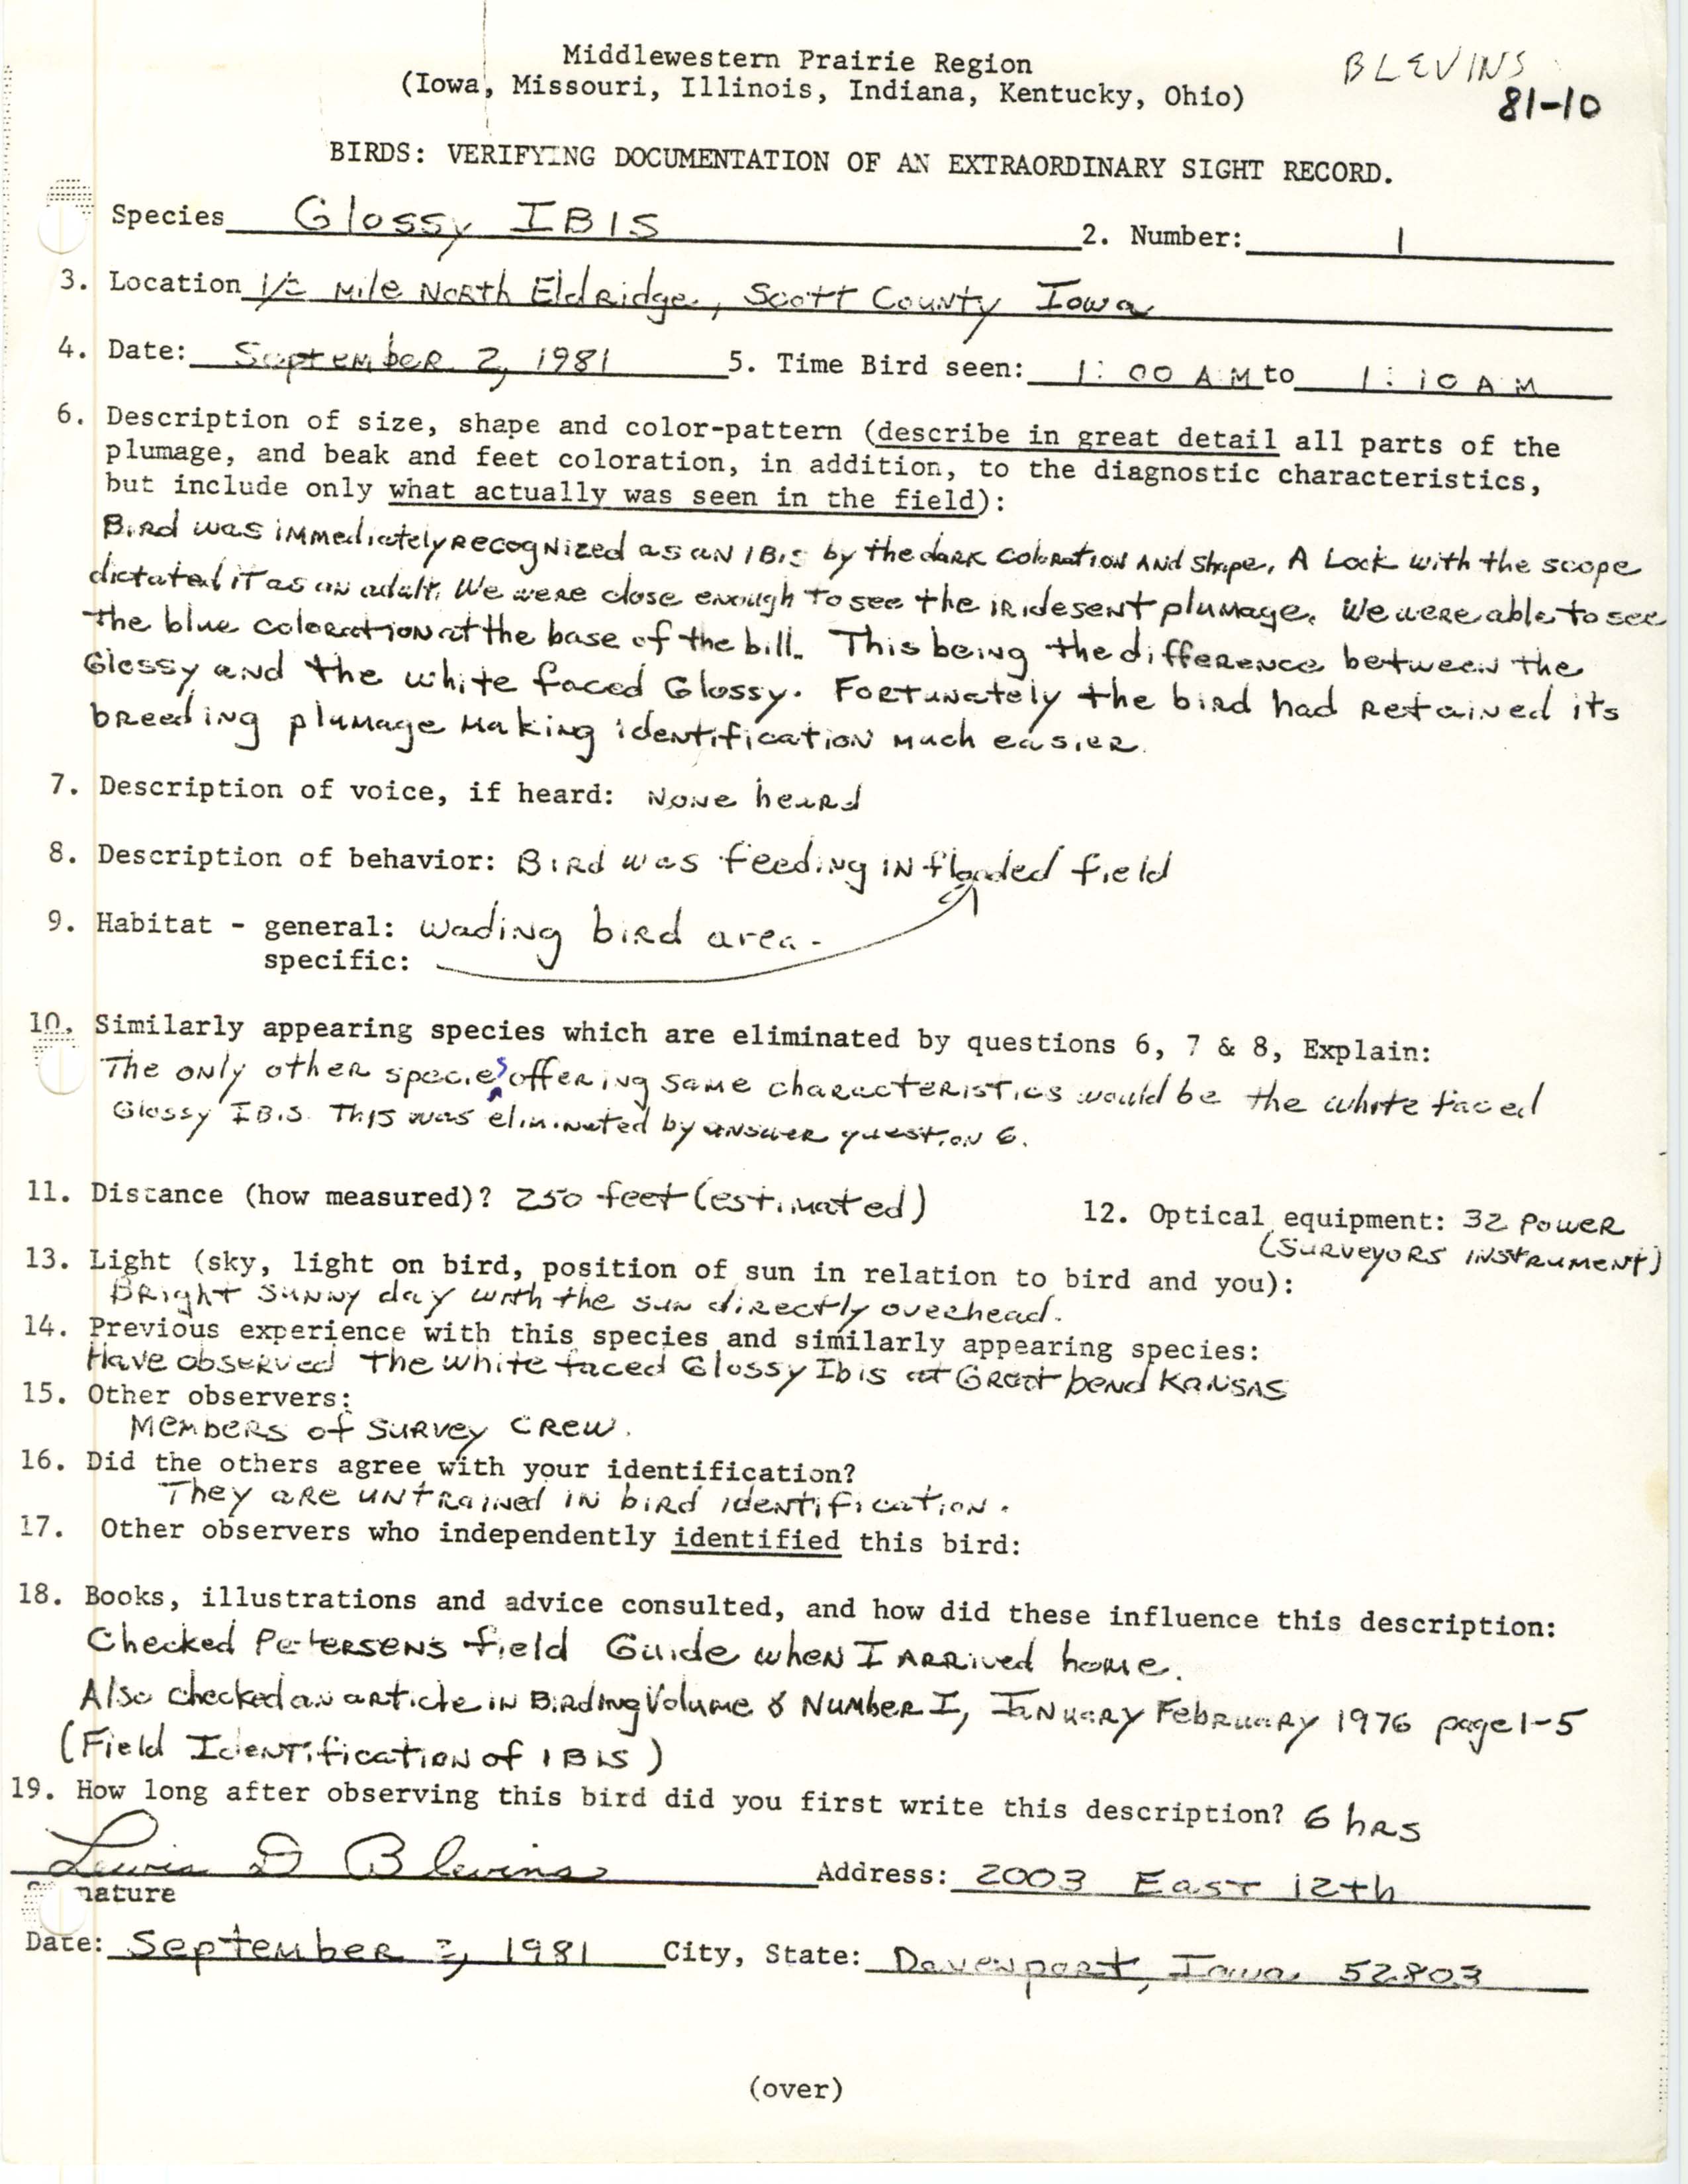 Rare bird documentation form for Glossy Ibis at Eldridge, 1981